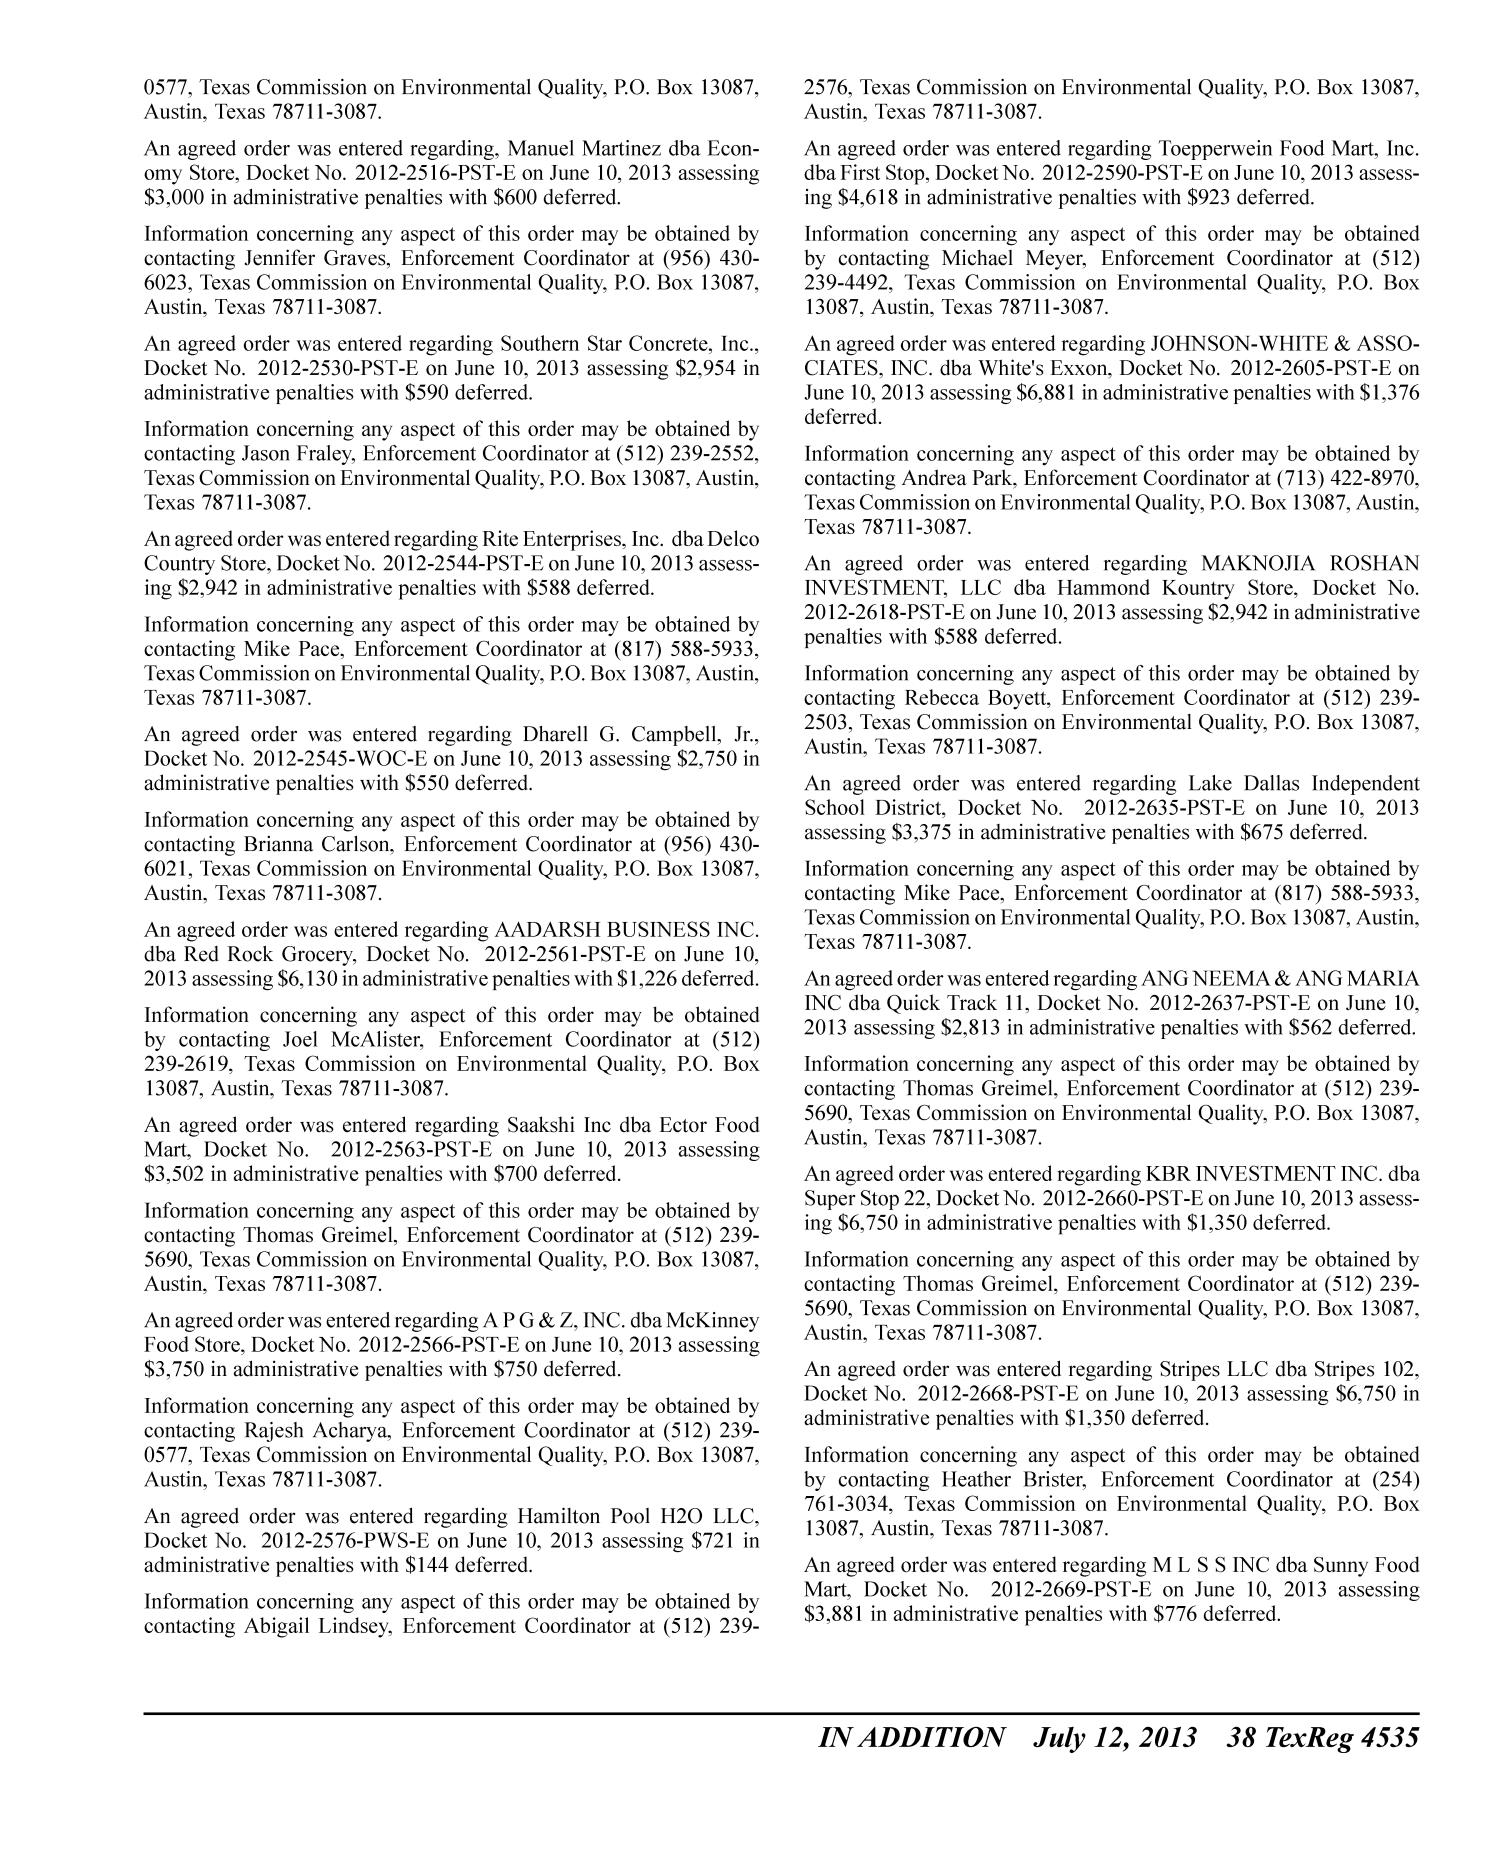 Texas Register, Volume 38, Number 28, Pages 4445-4554, July 12, 2013
                                                
                                                    4535
                                                